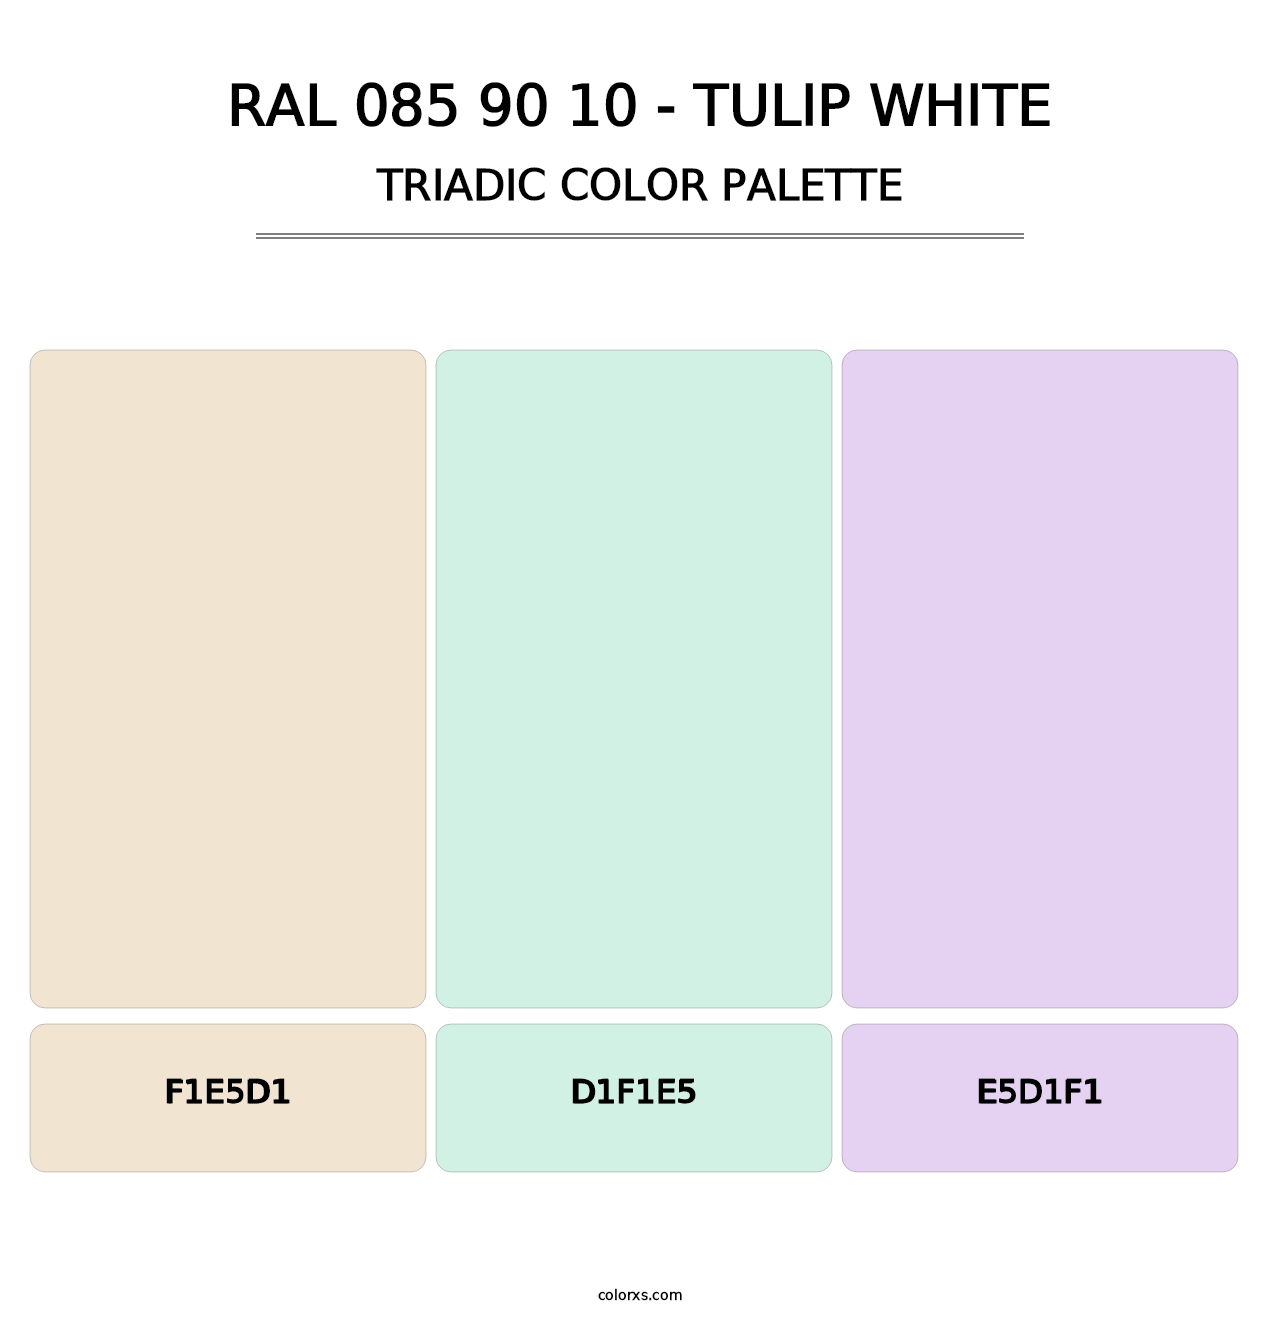 RAL 085 90 10 - Tulip White - Triadic Color Palette